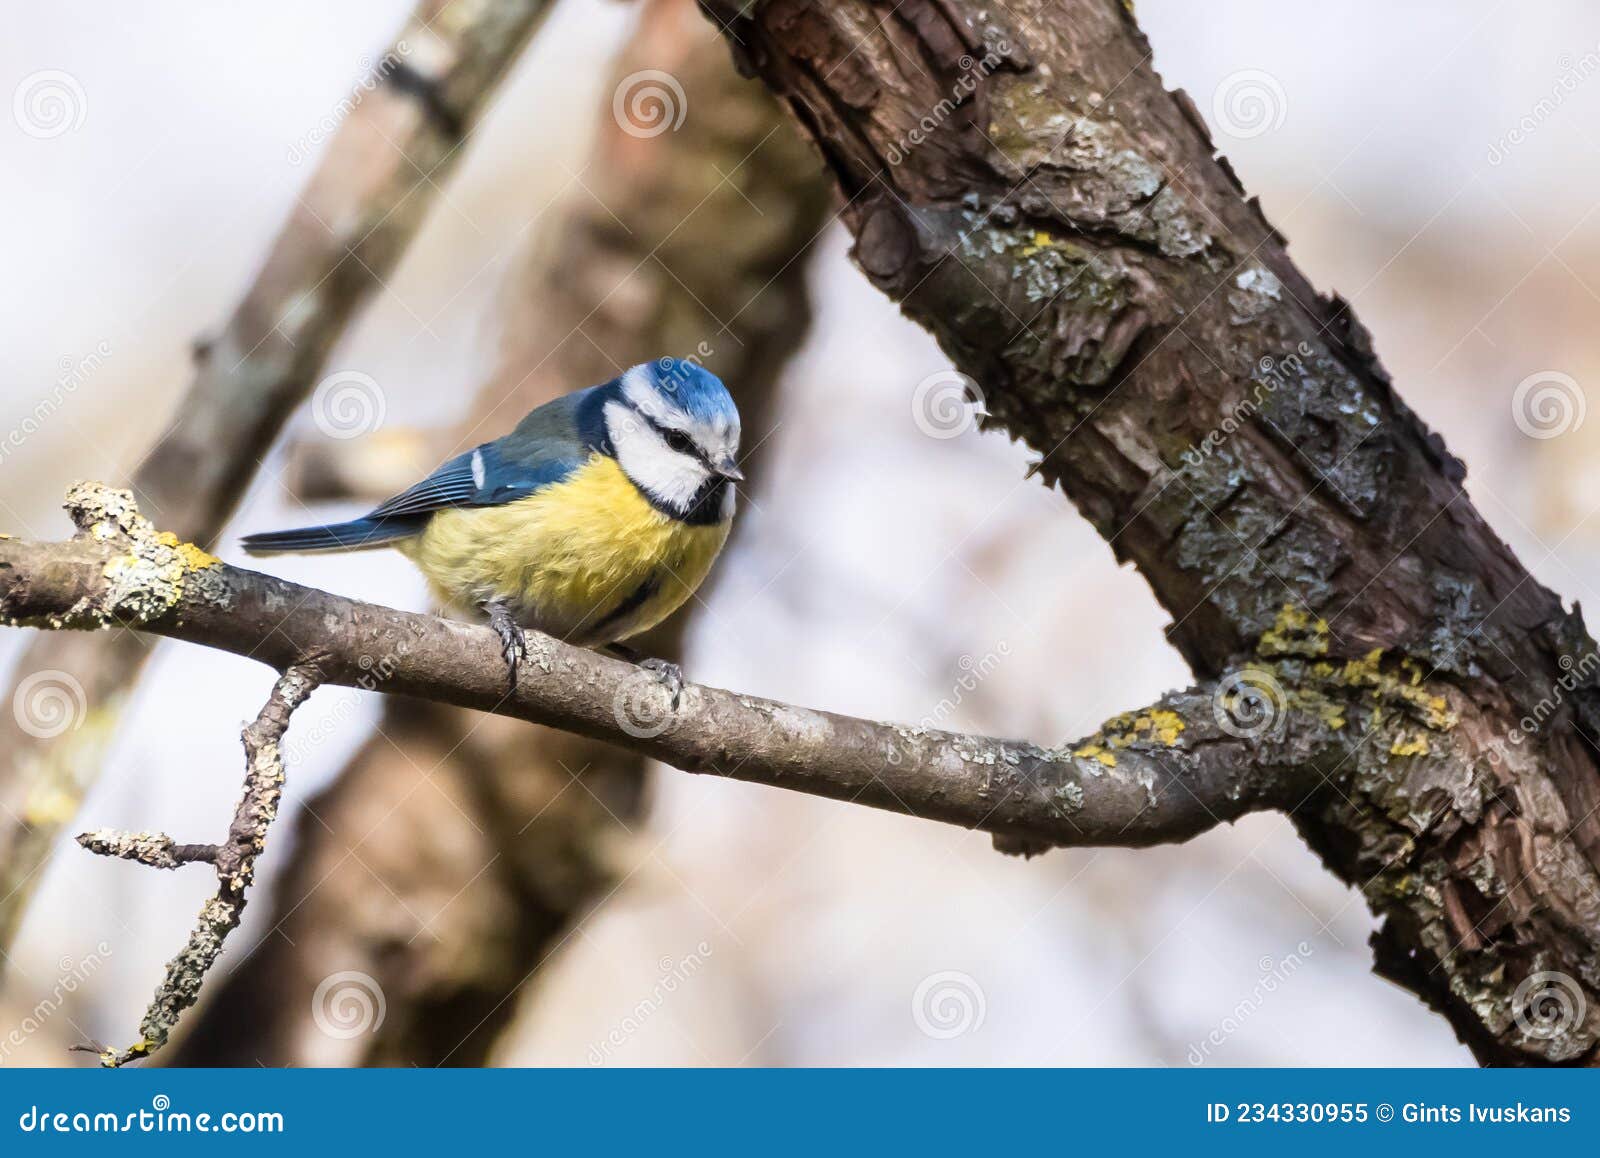 eurasian blue tit bird on branch of tree, cyanistes caer uleus